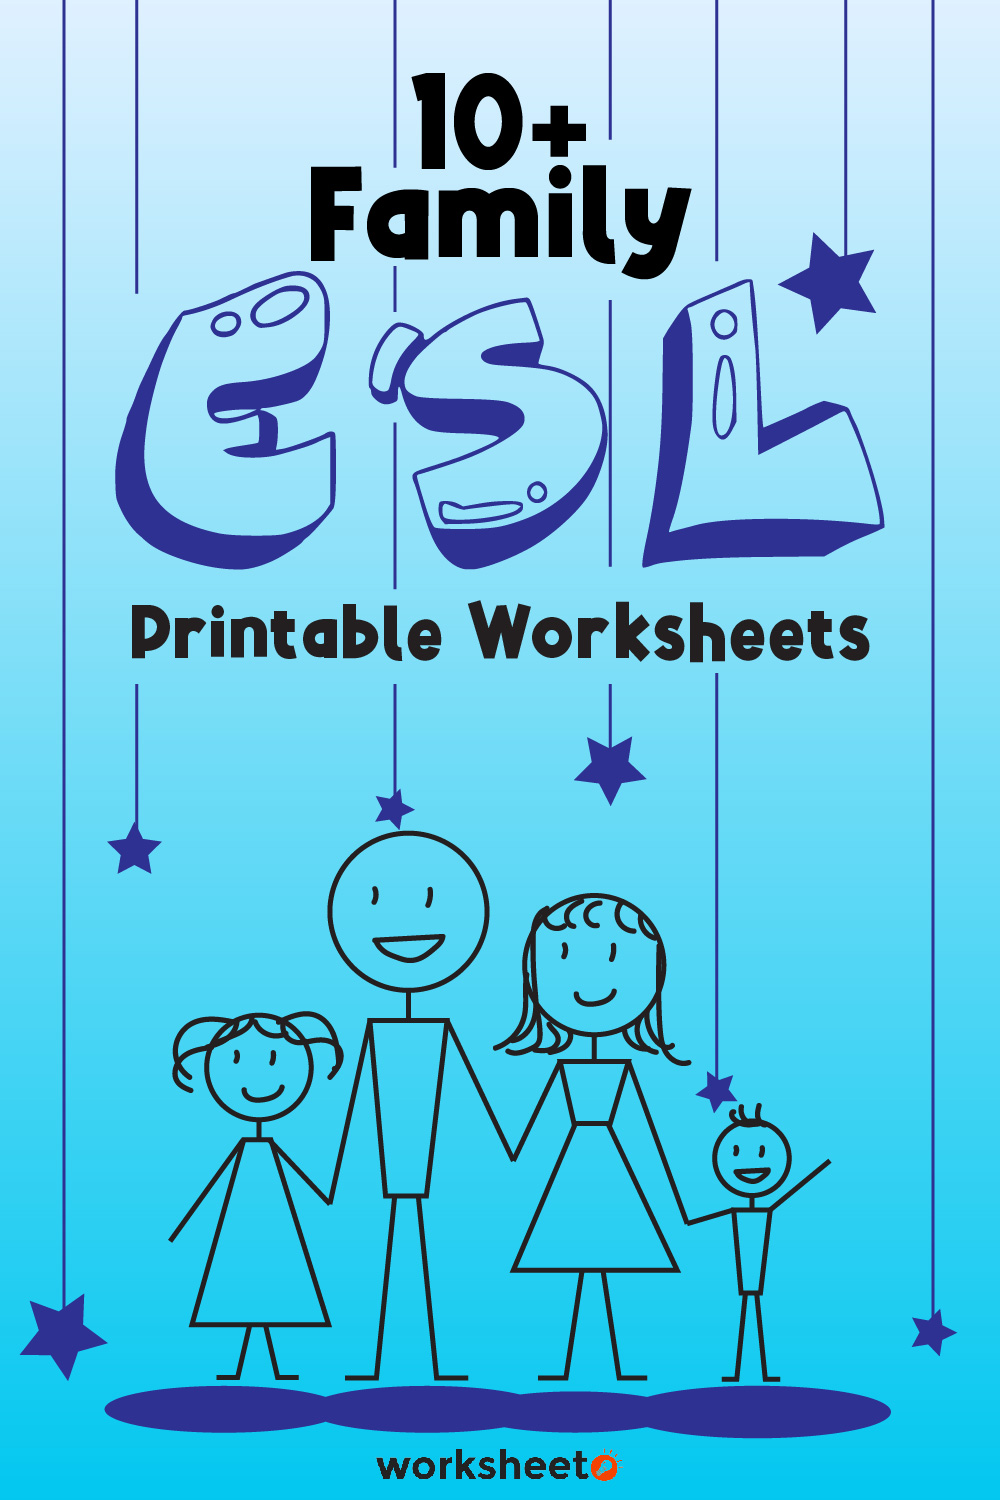 20 Images of Family ESL Printable Worksheets